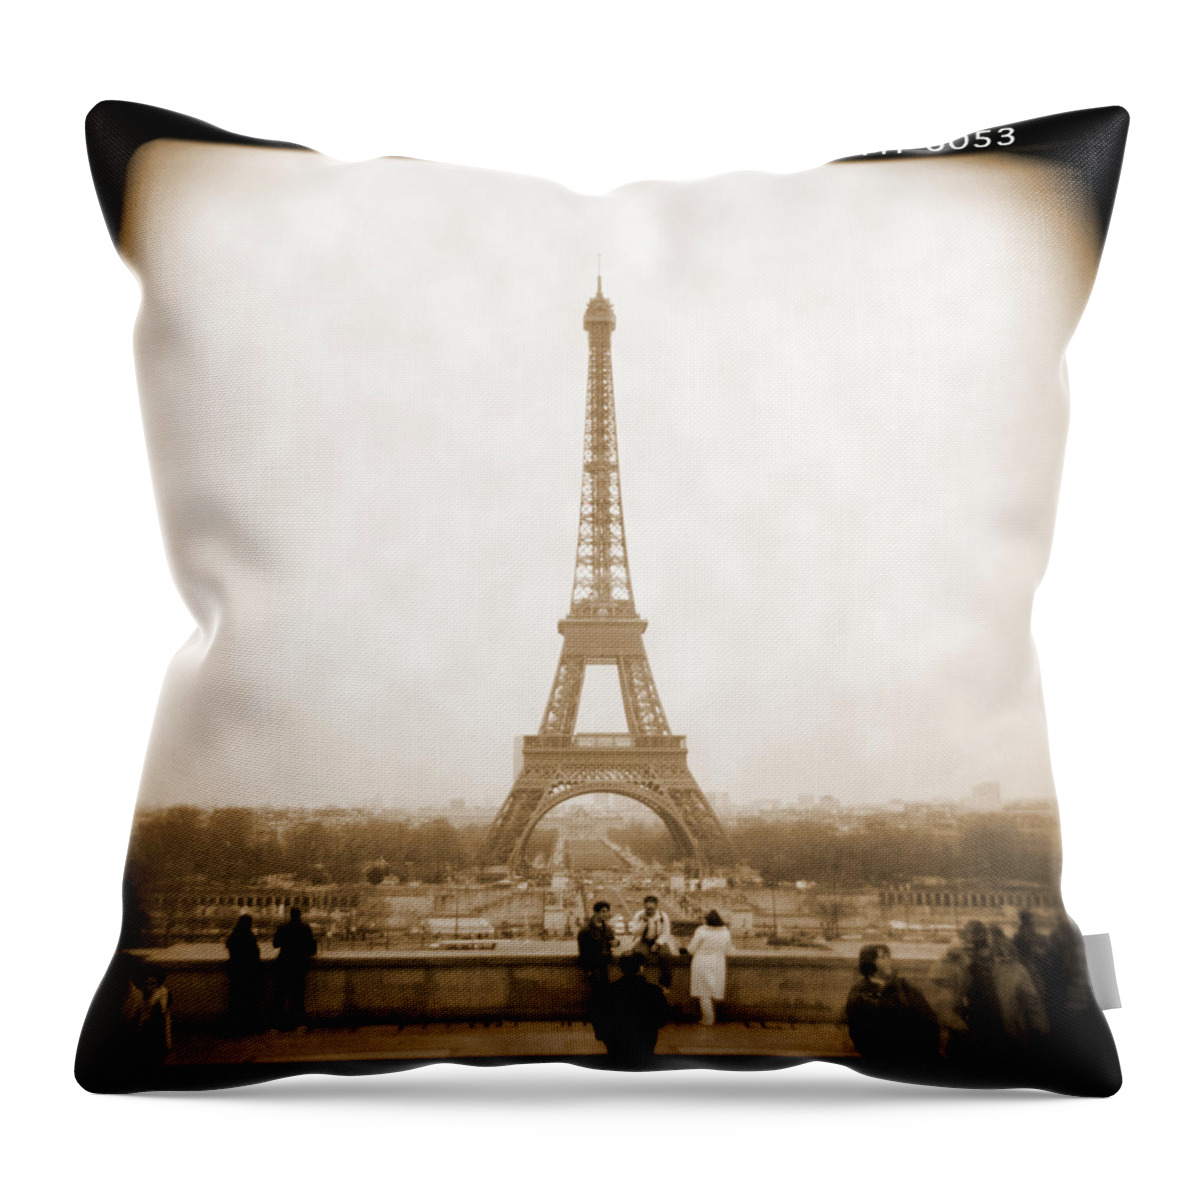 Paris France Throw Pillow featuring the photograph A Walk Through Paris 5 by Mike McGlothlen